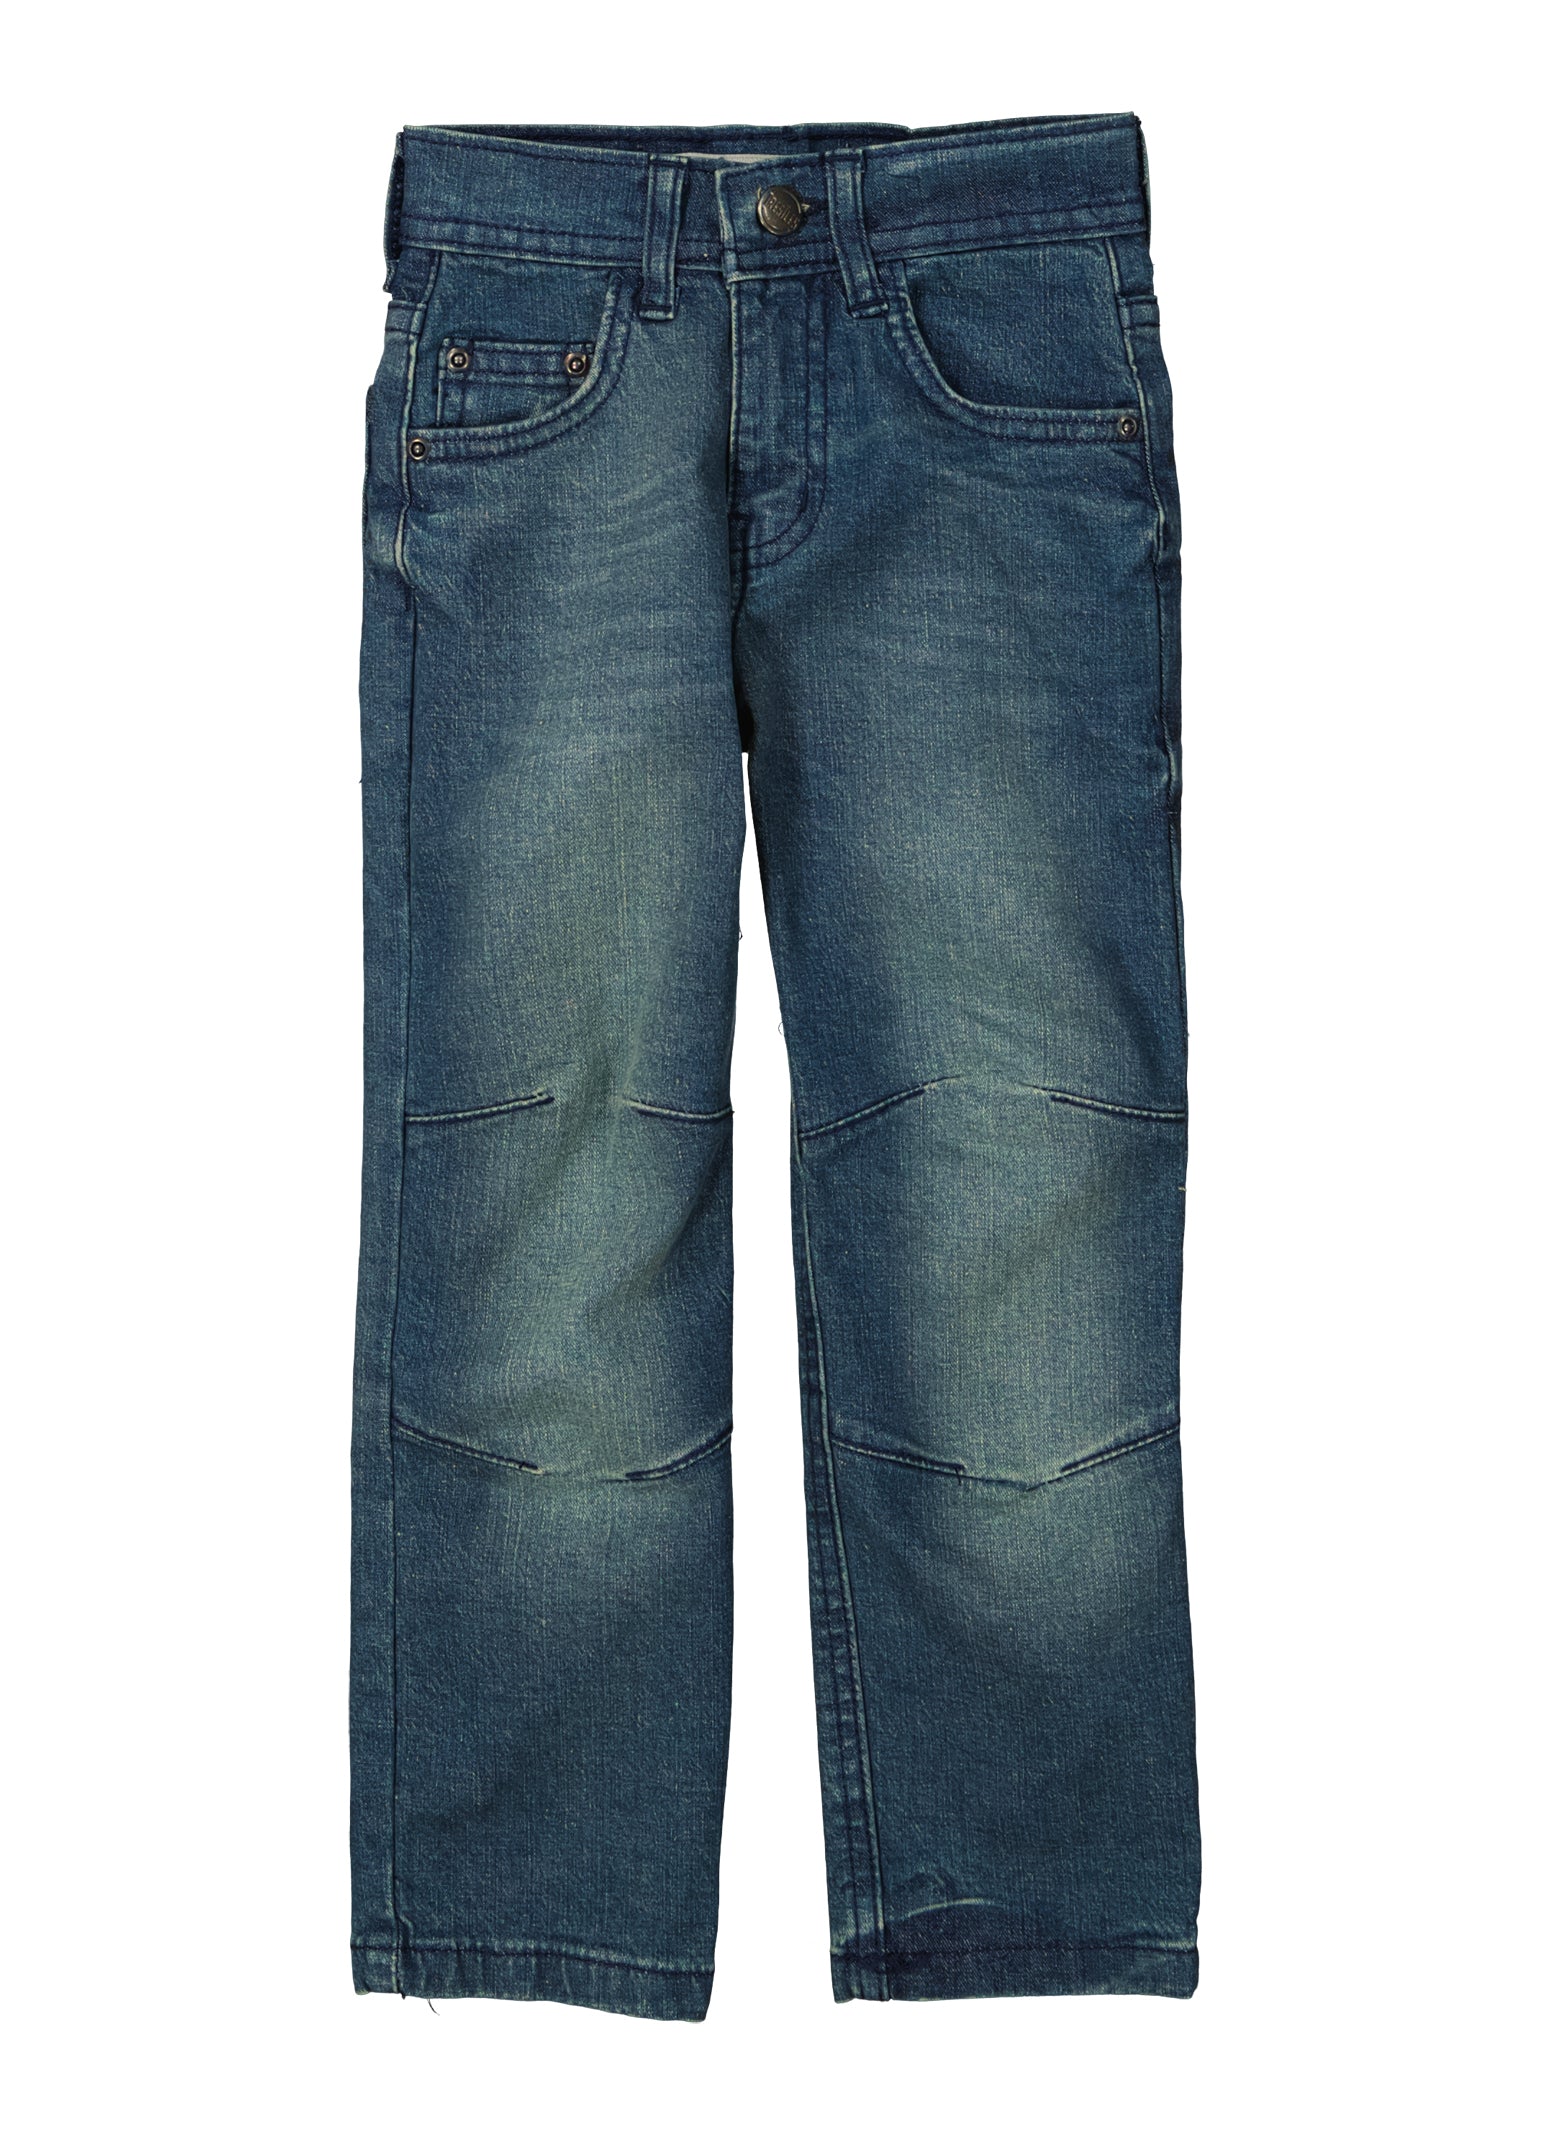 Little Boys Whiskered Moto Detail Jeans, Blue, Size 4